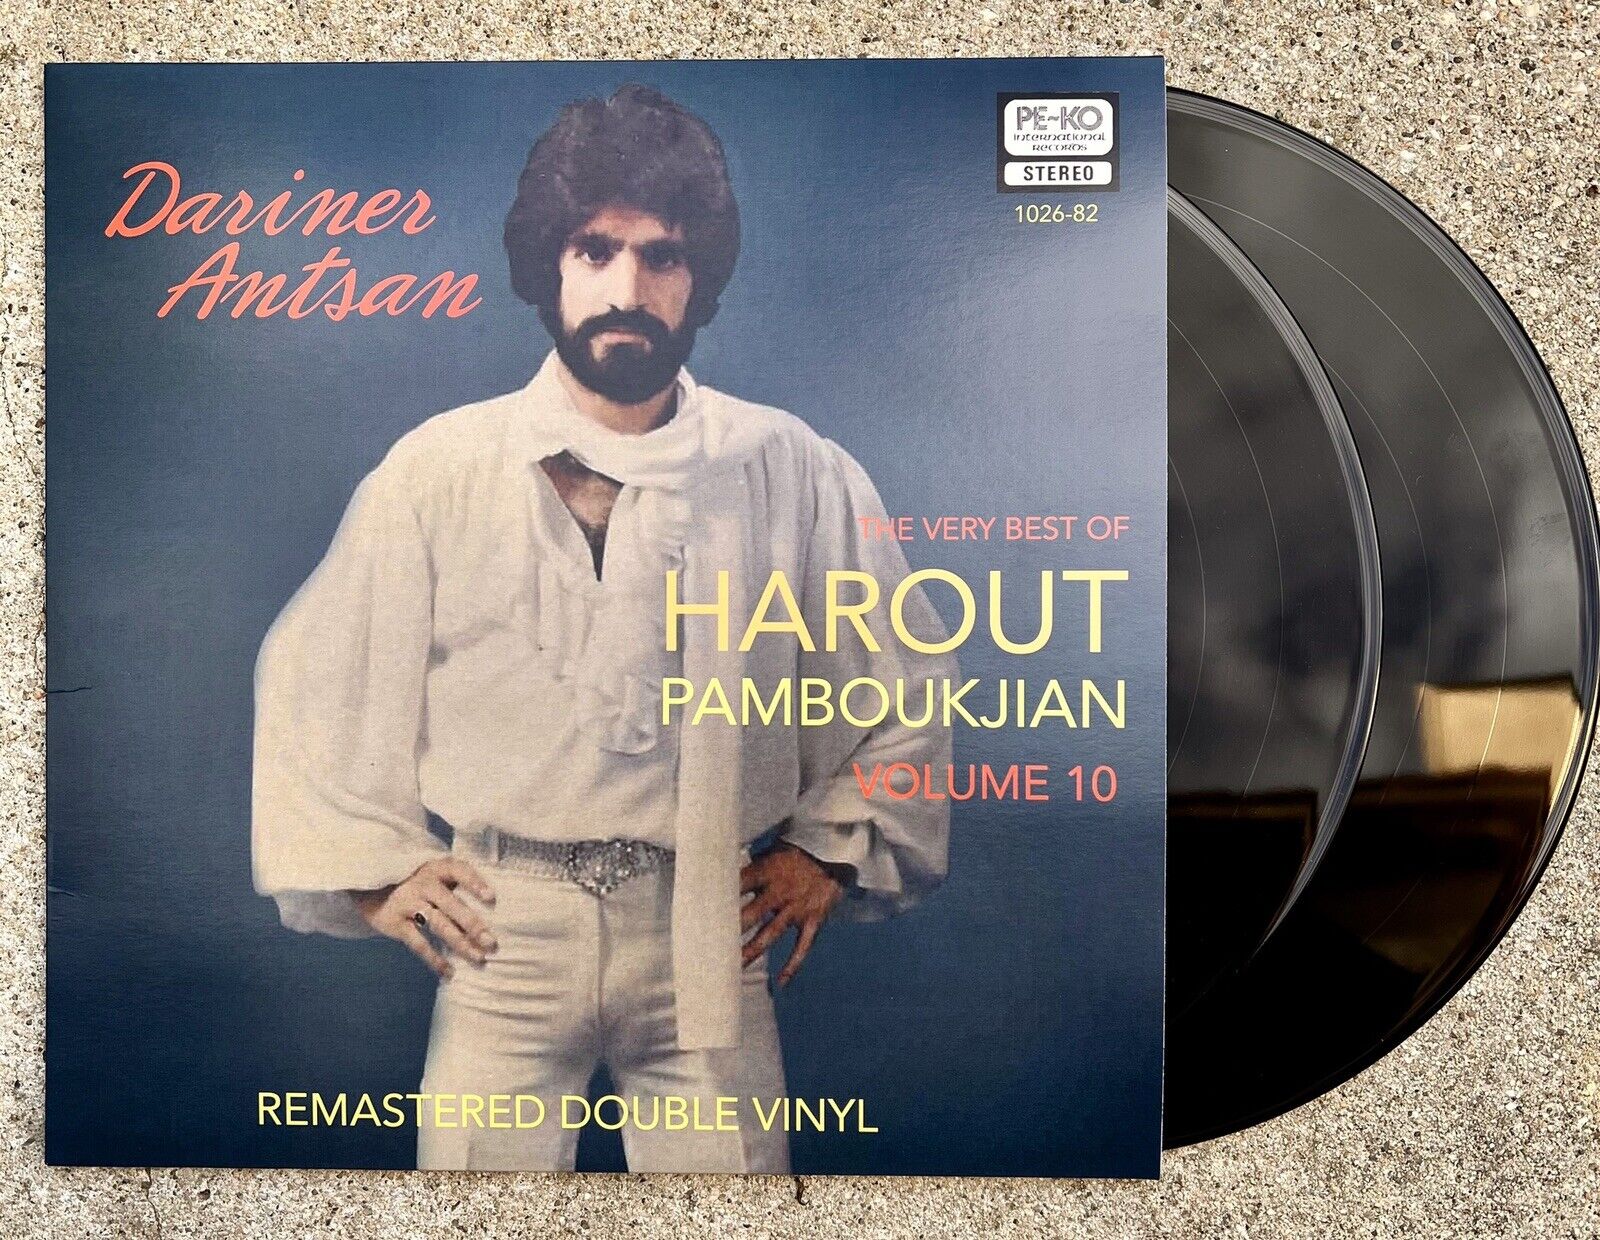 Harout Pamboukjian Vol.10                           (Double Vinyls For $80)